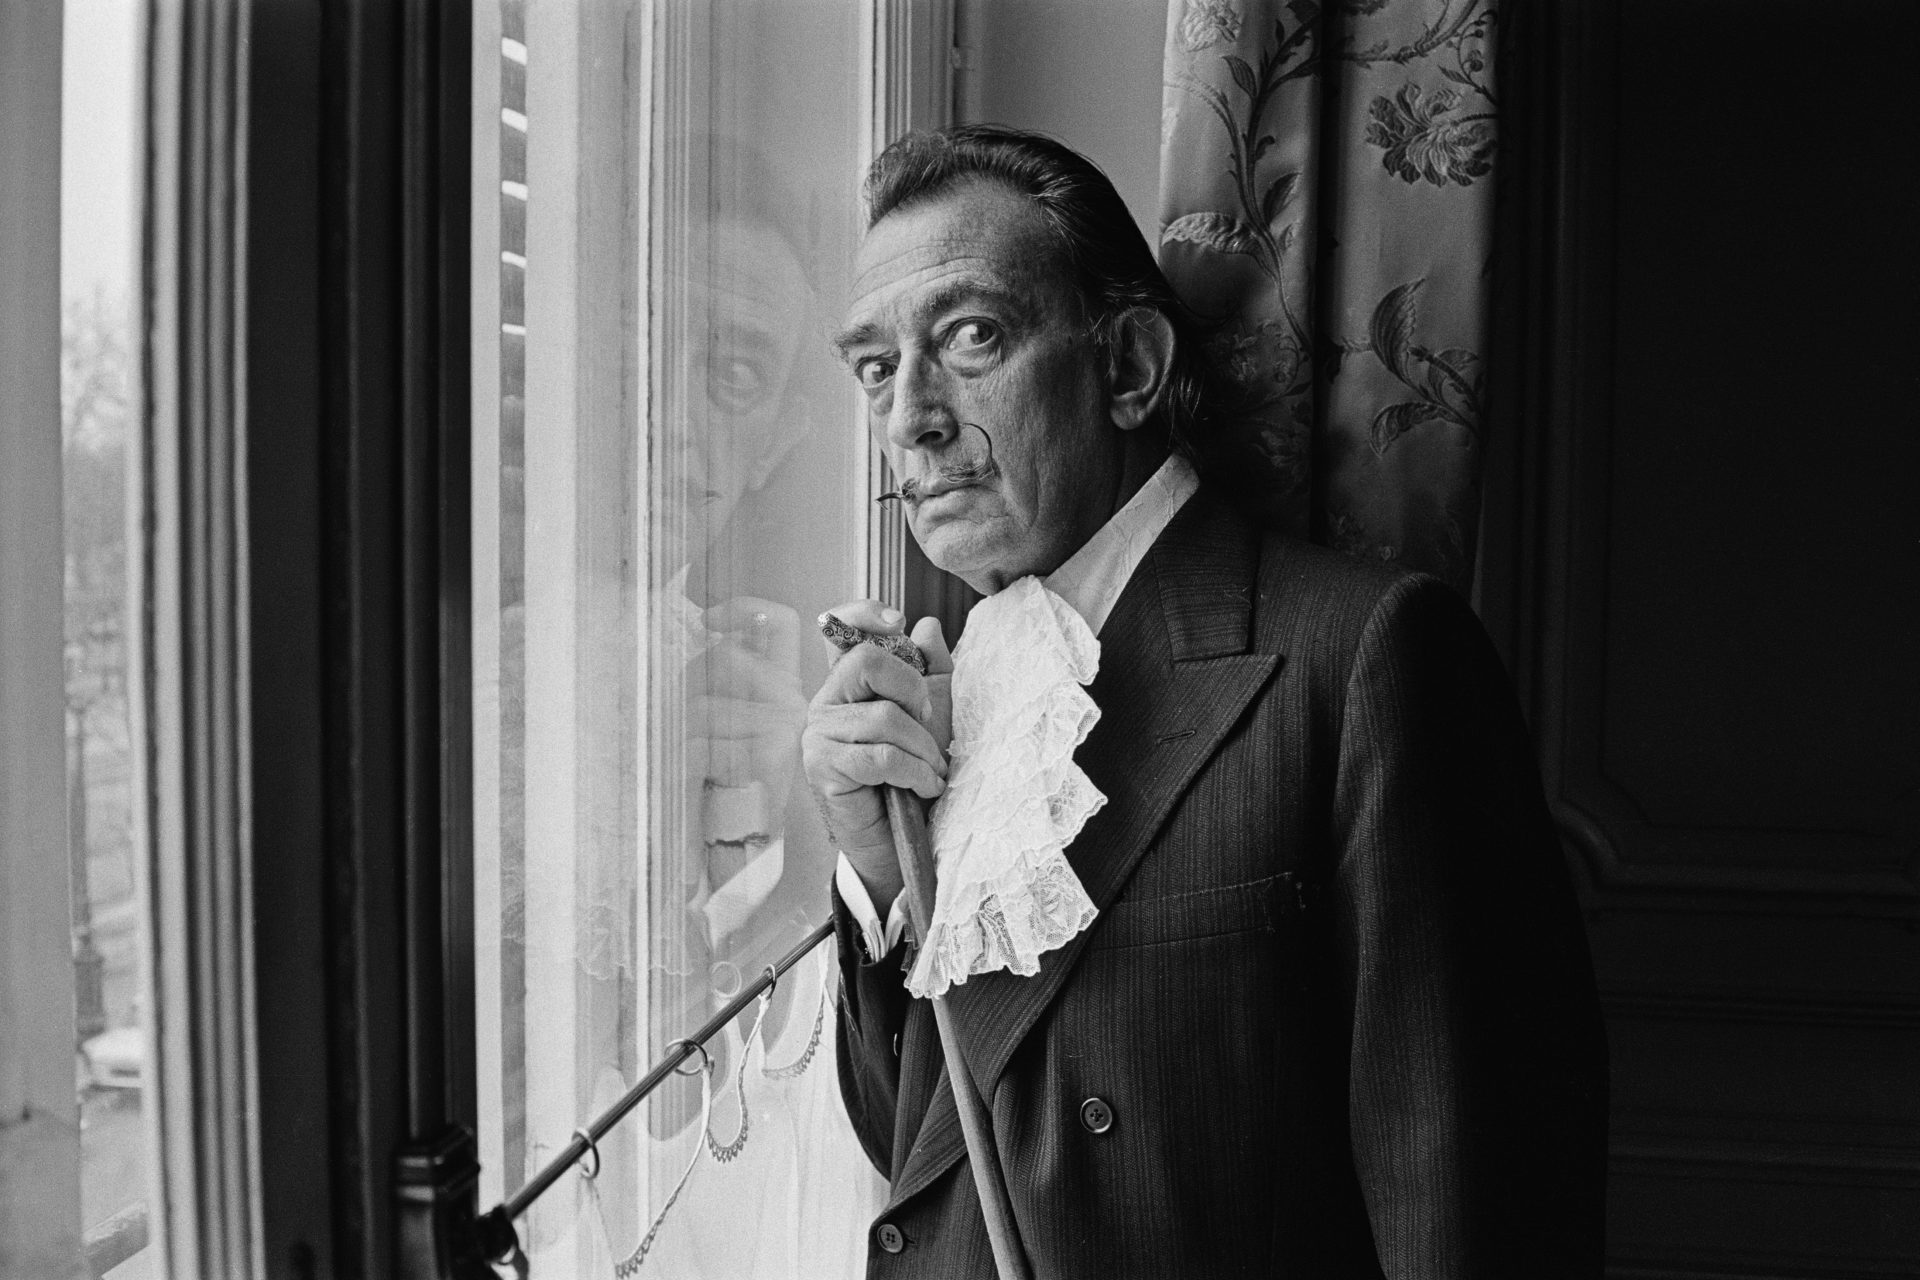 Salvador Dali (1904-1989)